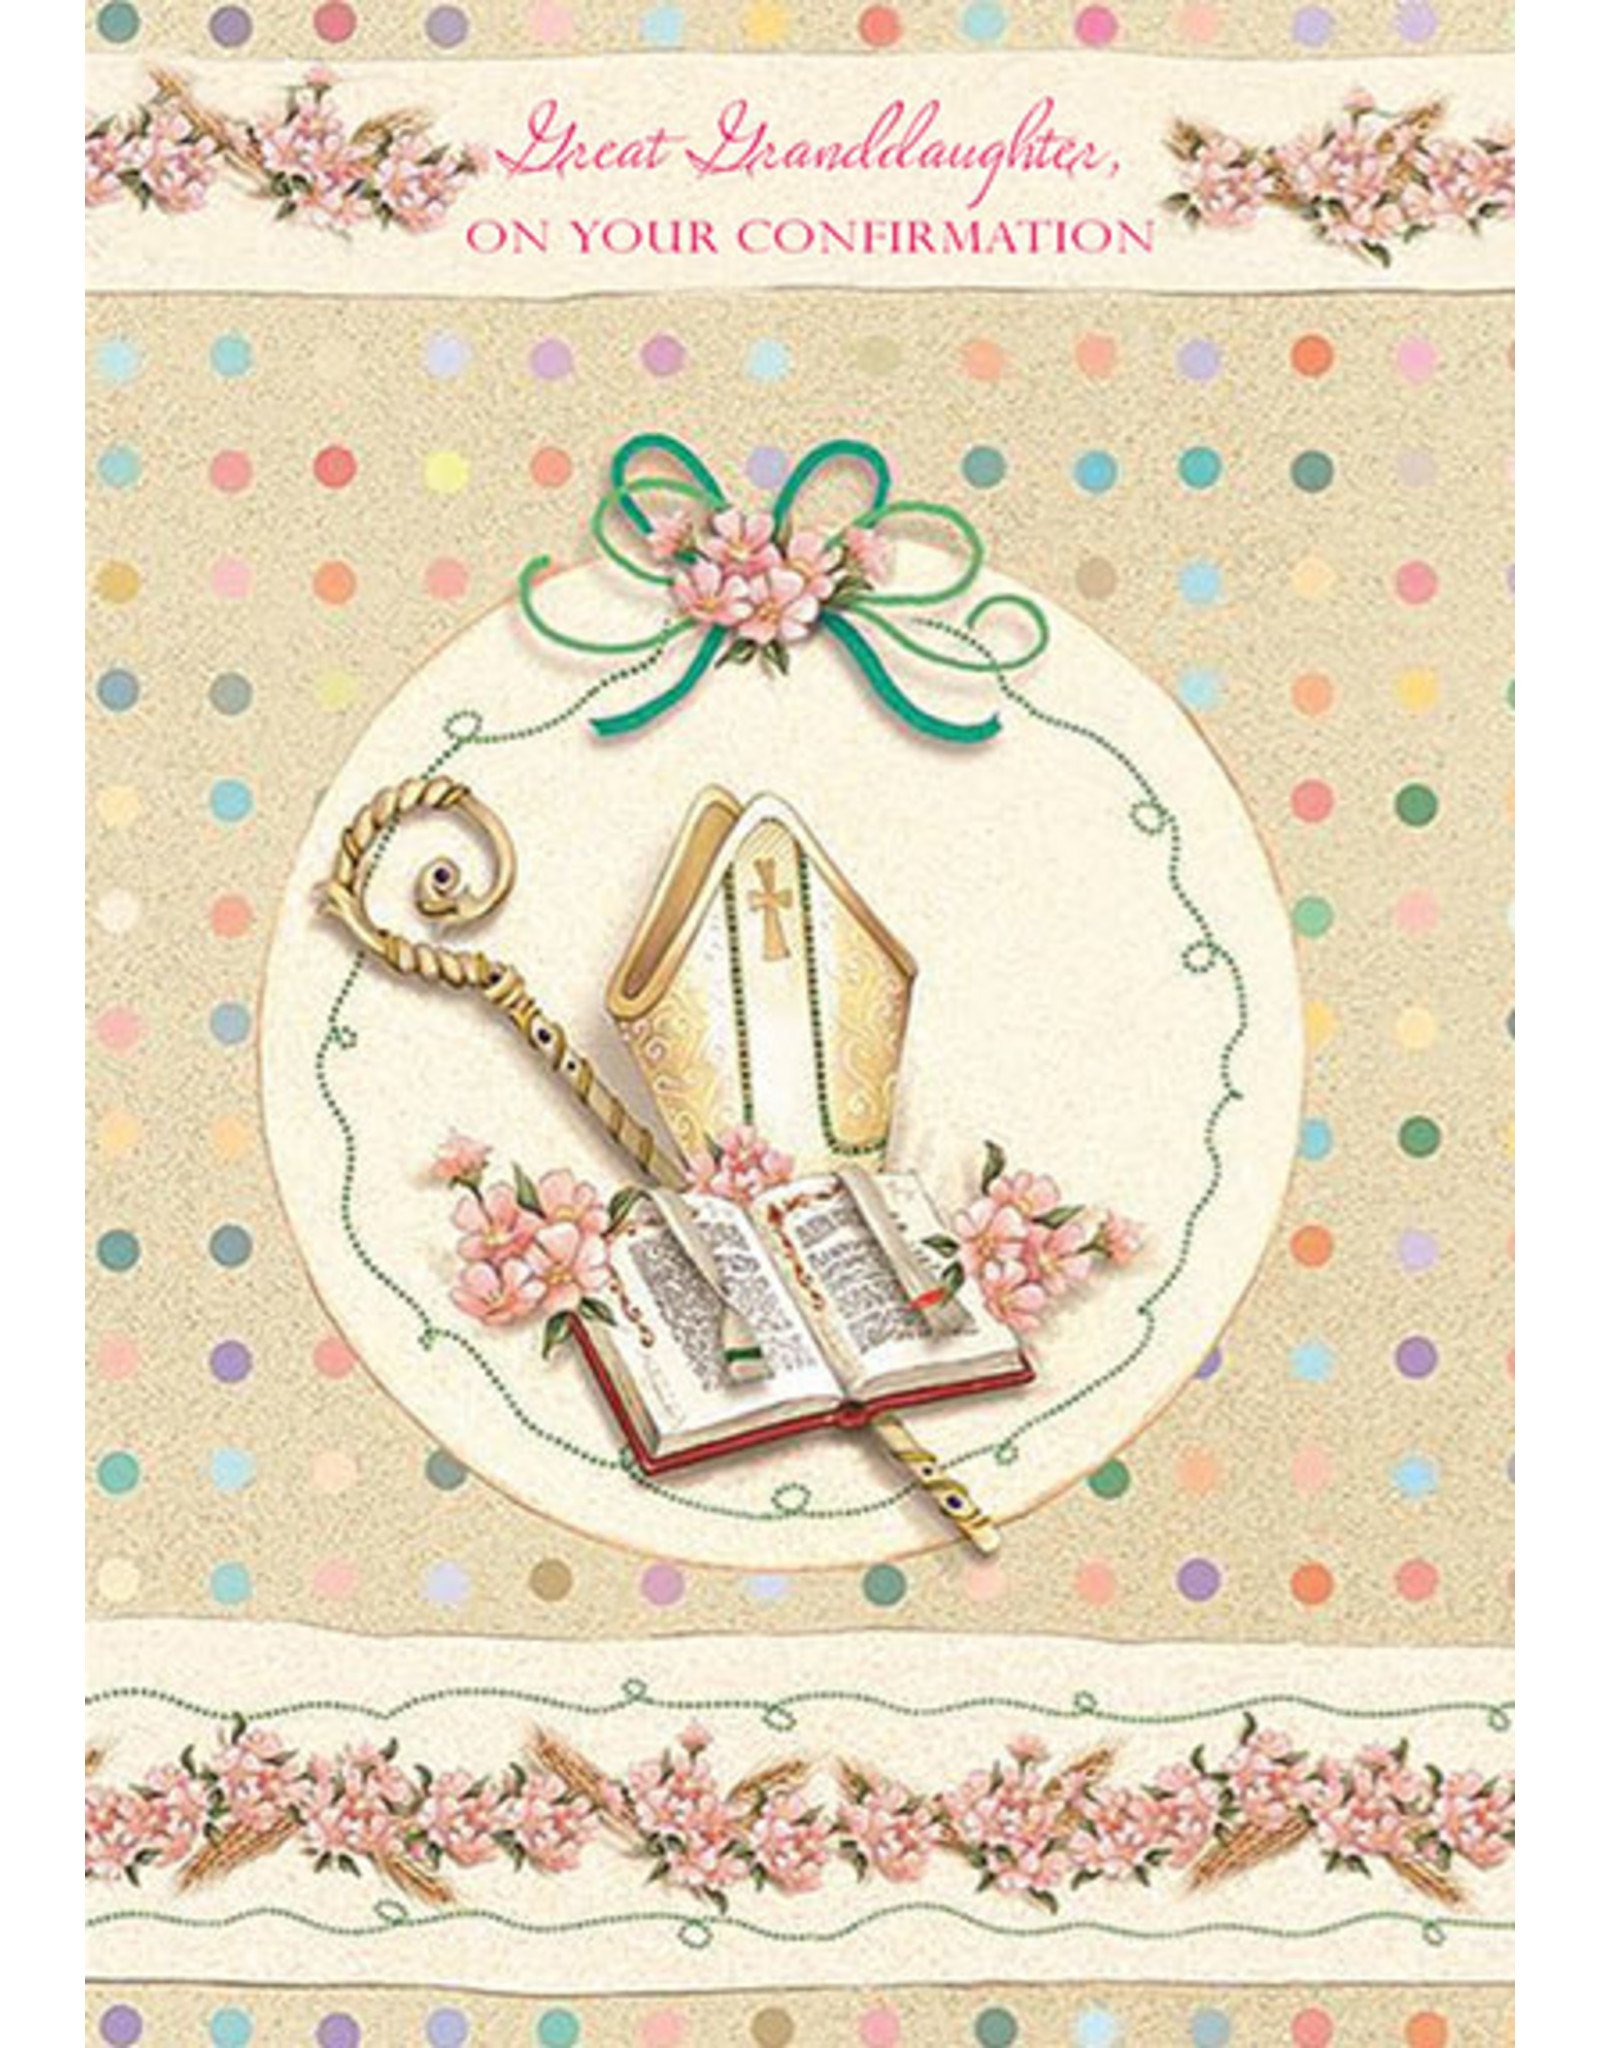 Card - Confirmation Great Granddaughter, Polka Dots